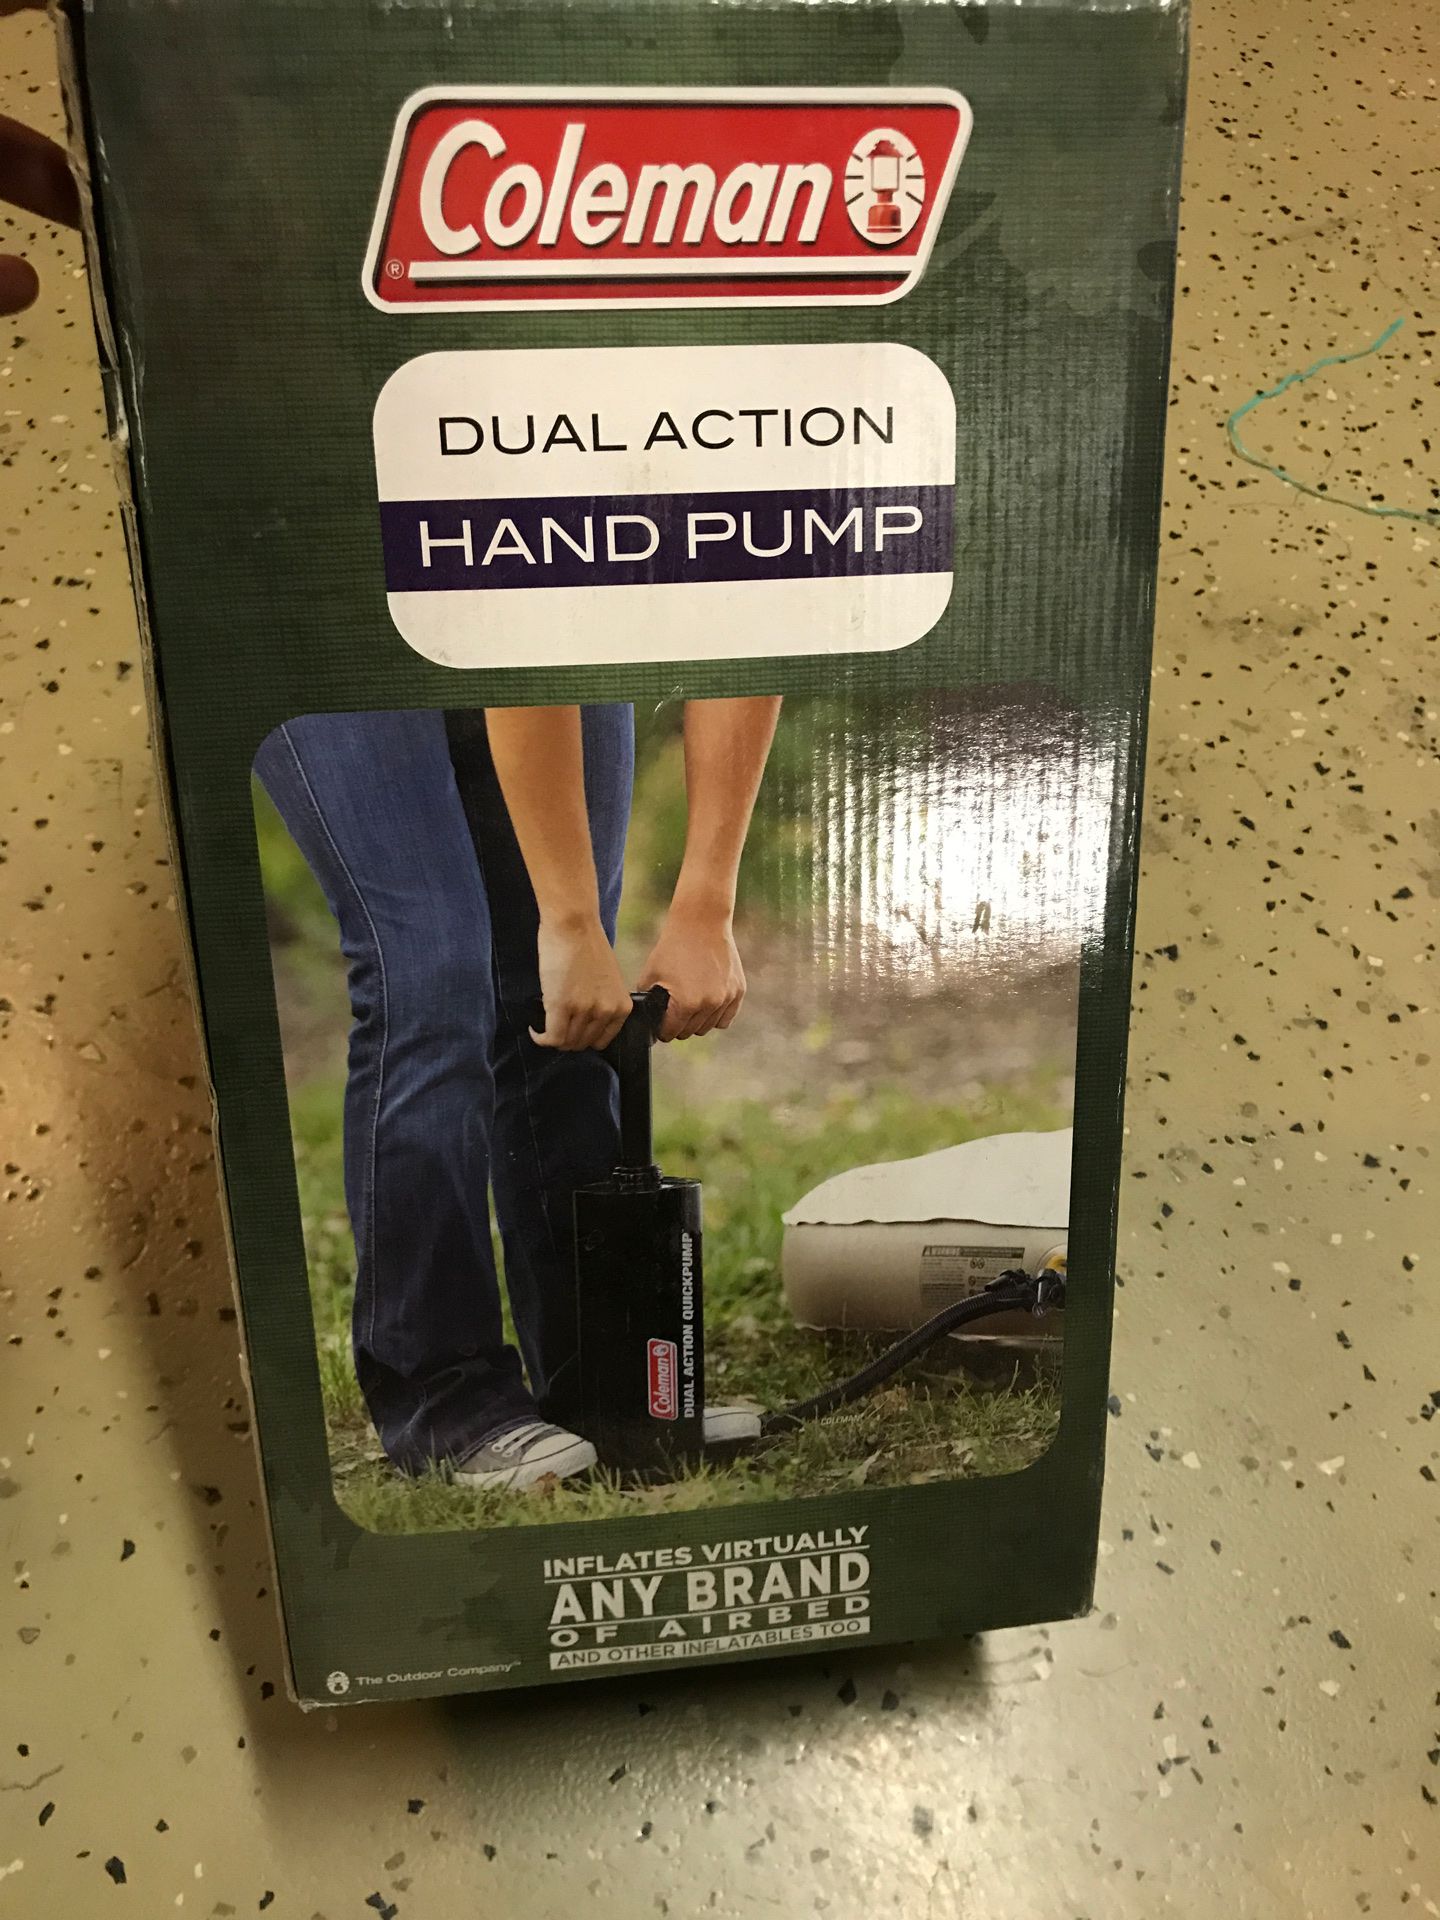 Hand pump